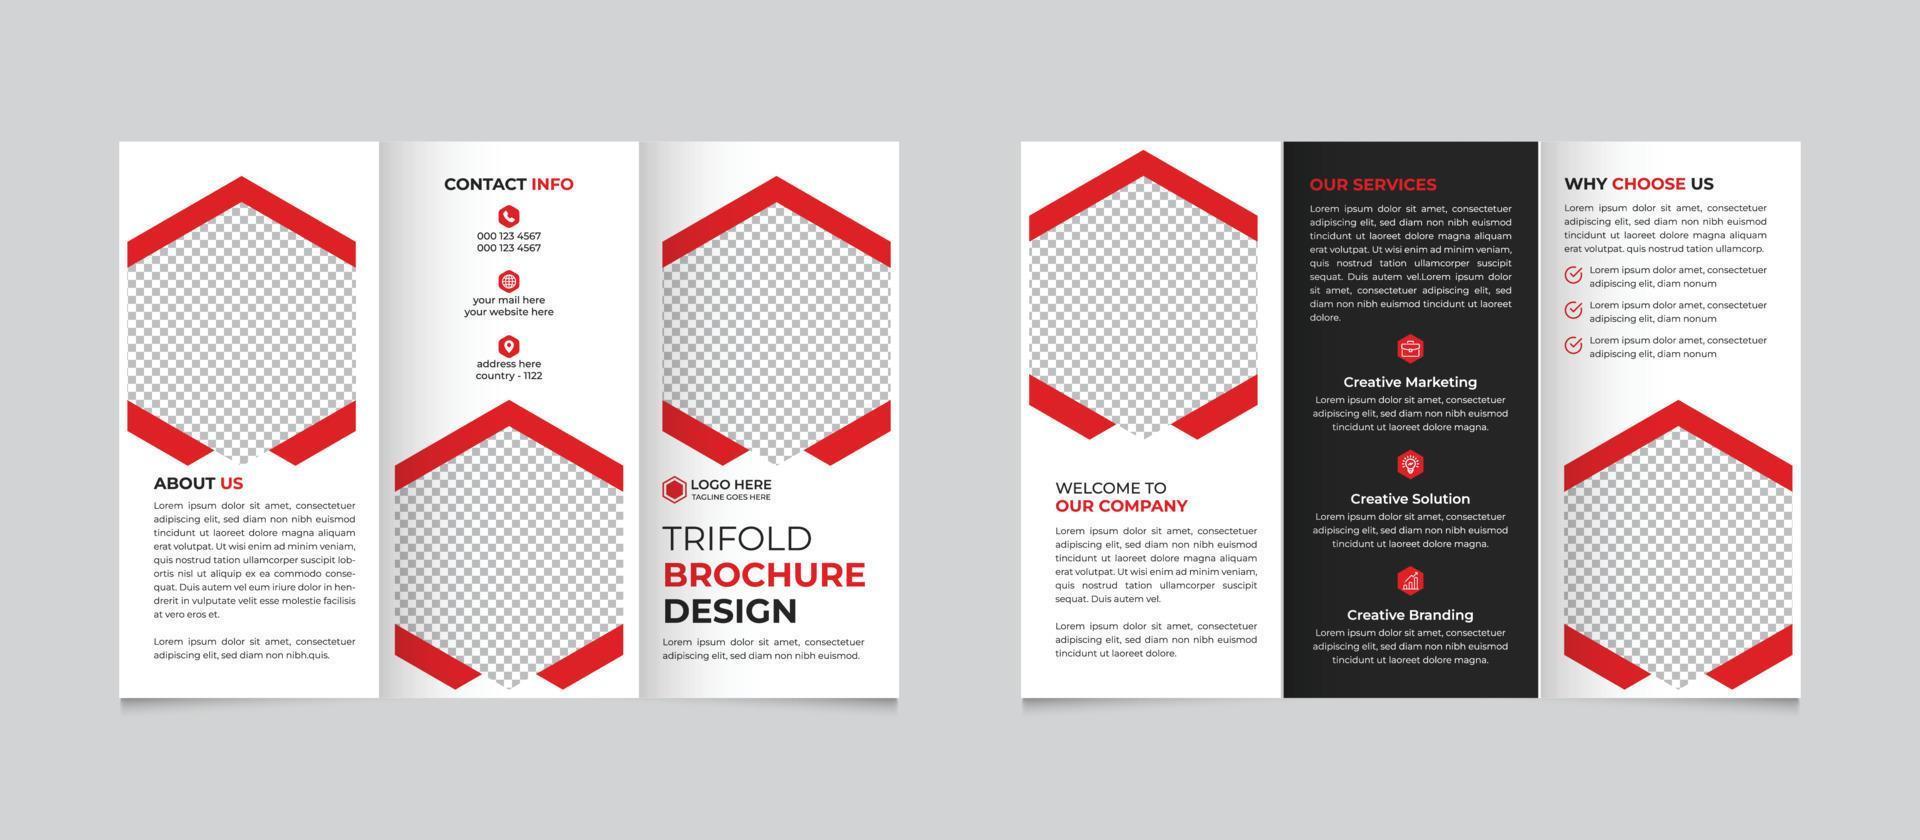 Creative Modern Corporate Tri Fold Brochure Template Design Free Vector